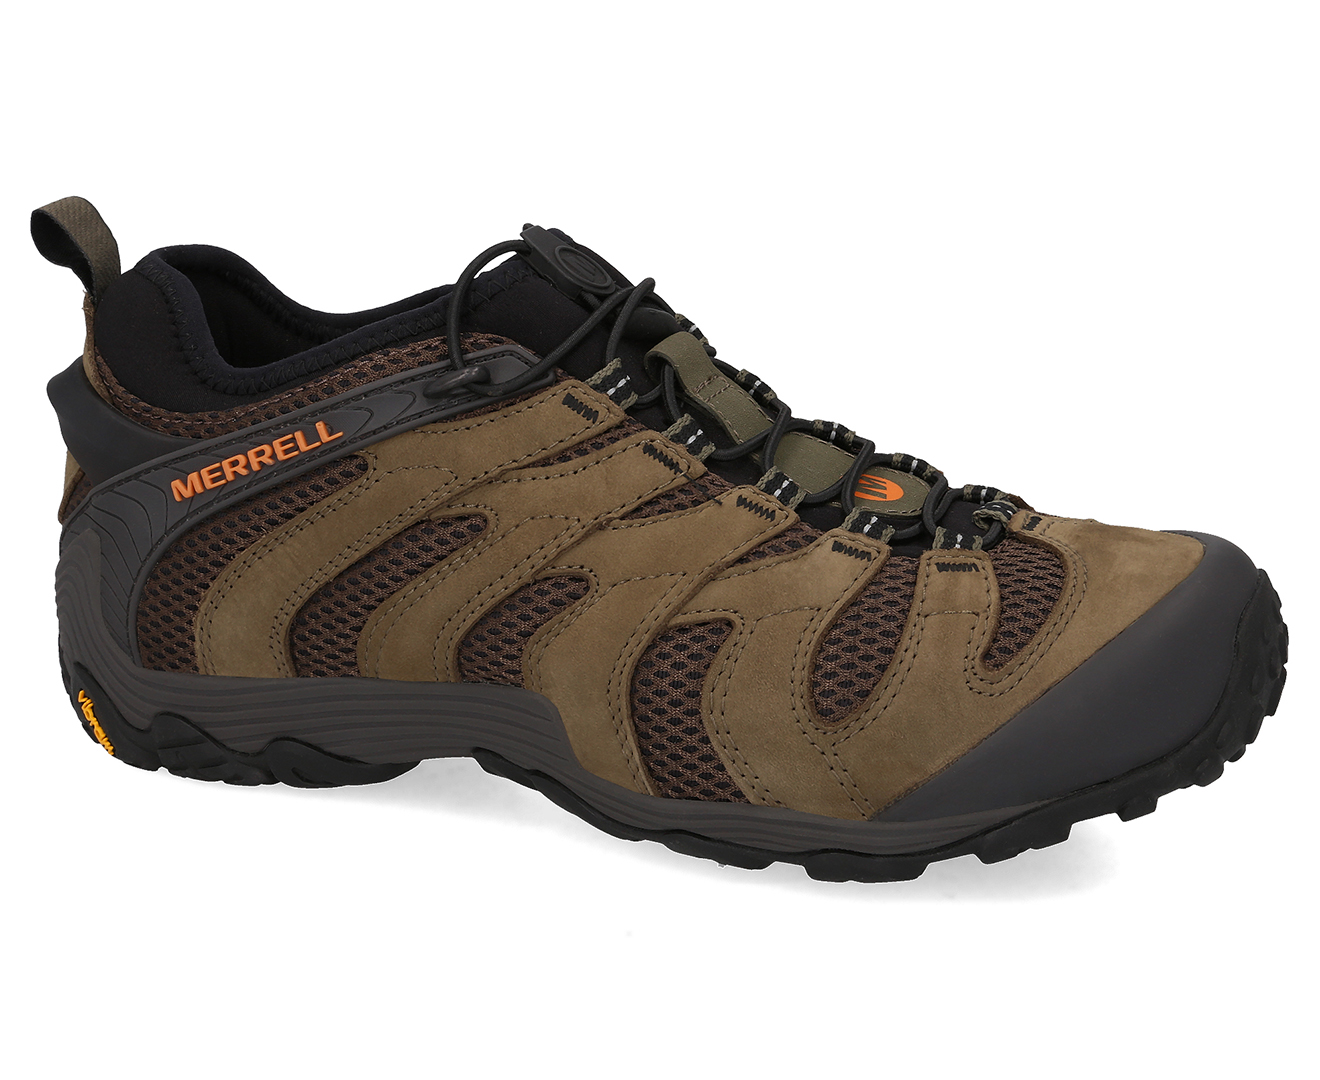 Merrell Men's Chameleon 7 Stretch Hiking Shoes - Dusty Olive | Catch.com.au